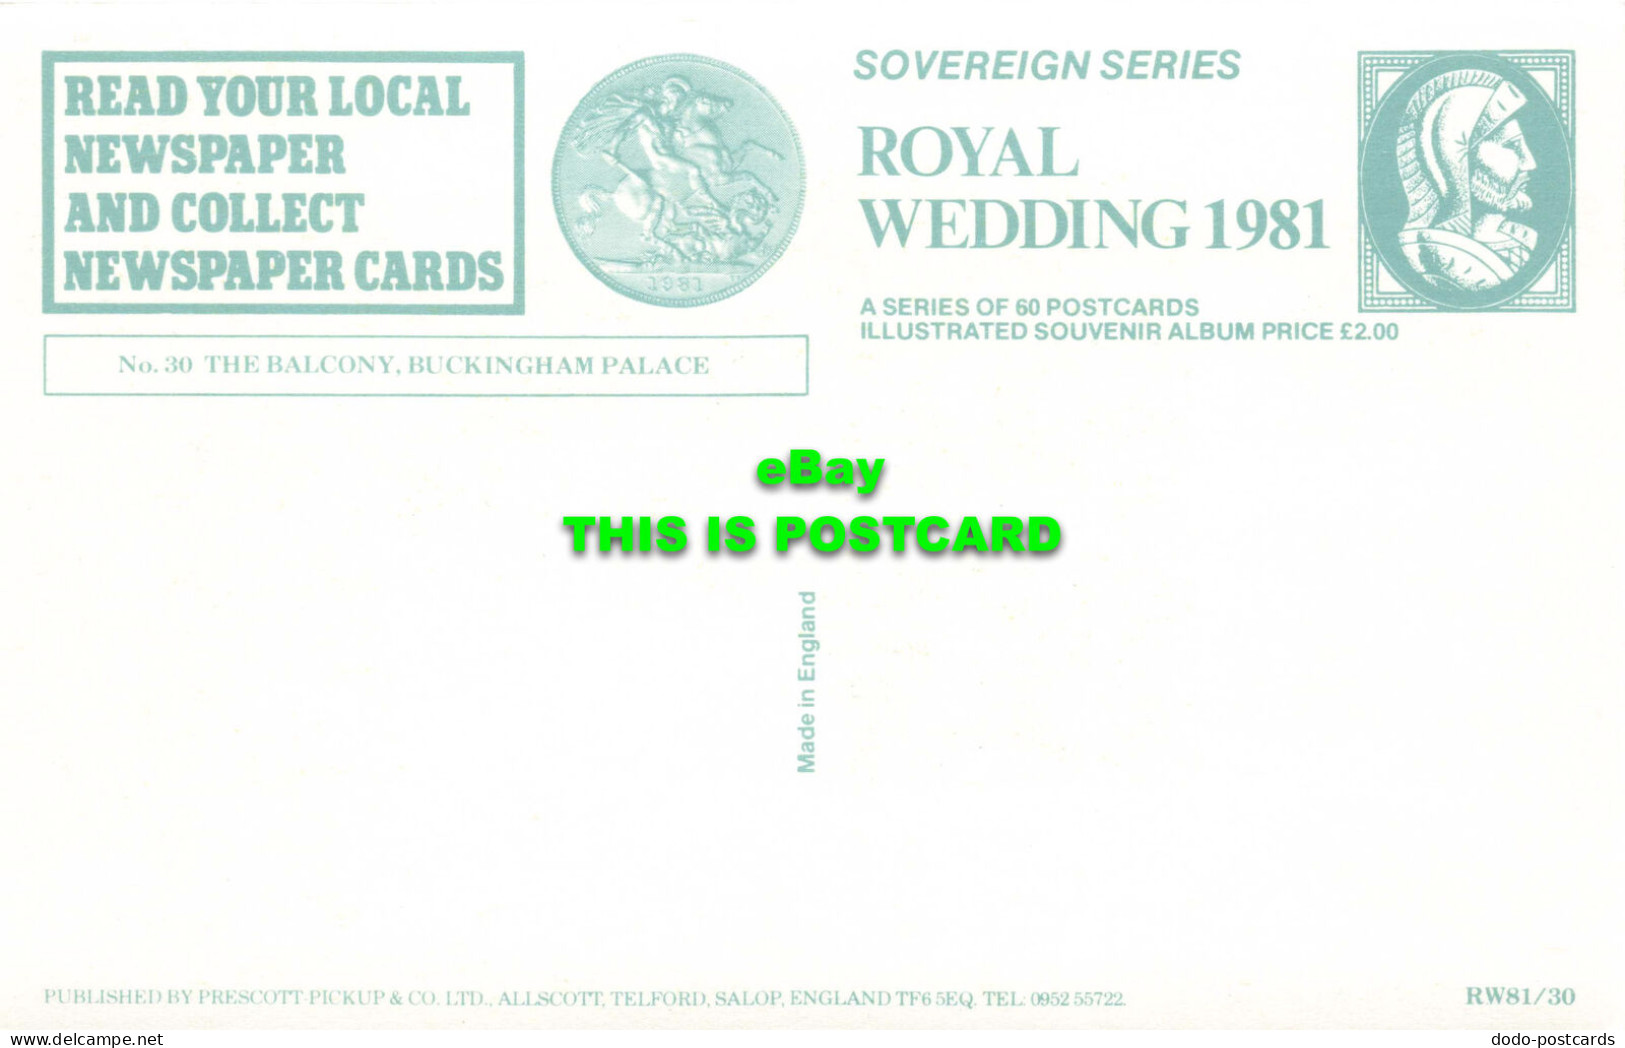 R575039 No. 30. Balcony. Buckingham Palace. Sovereign Series. Royal Wedding 1981 - World